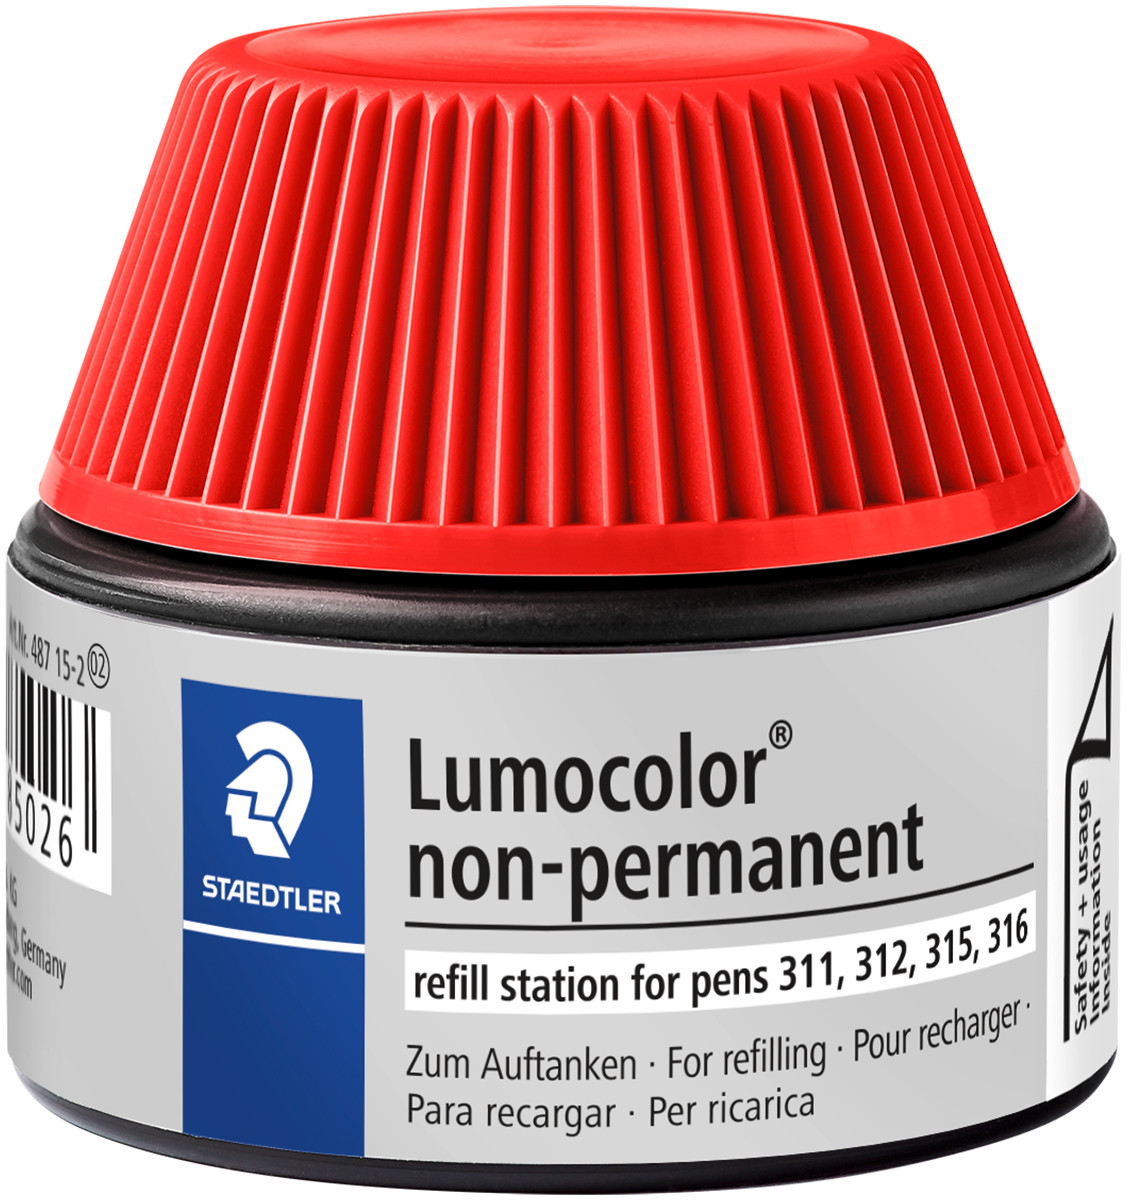 Staedtler Refill Station for Lumocolor Non-Permanent Pens